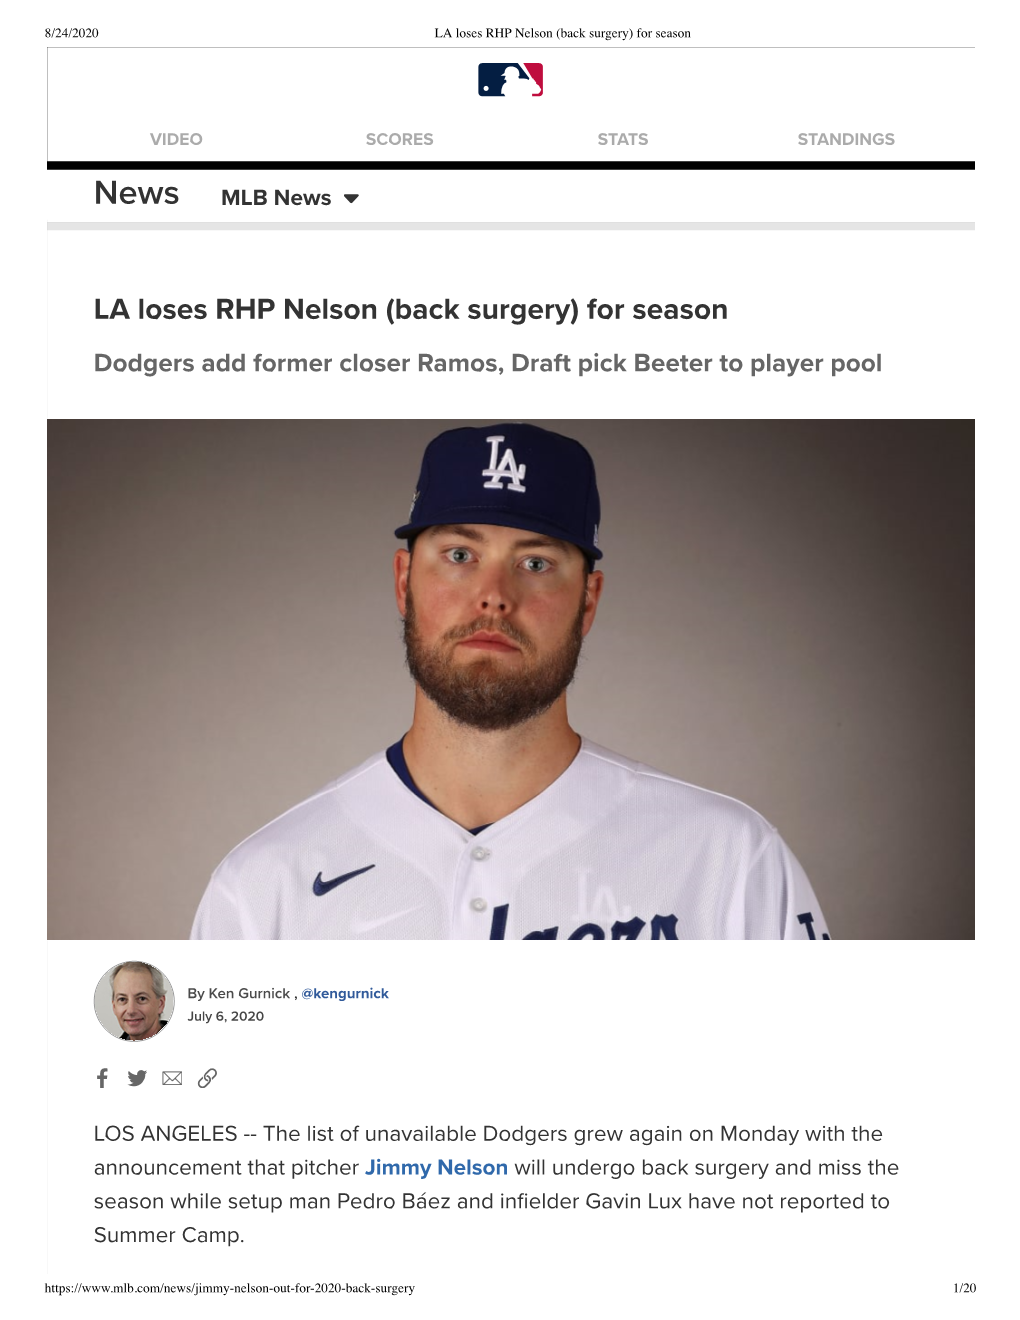 LA Loses RHP Nelson (Back Surgery) for Season